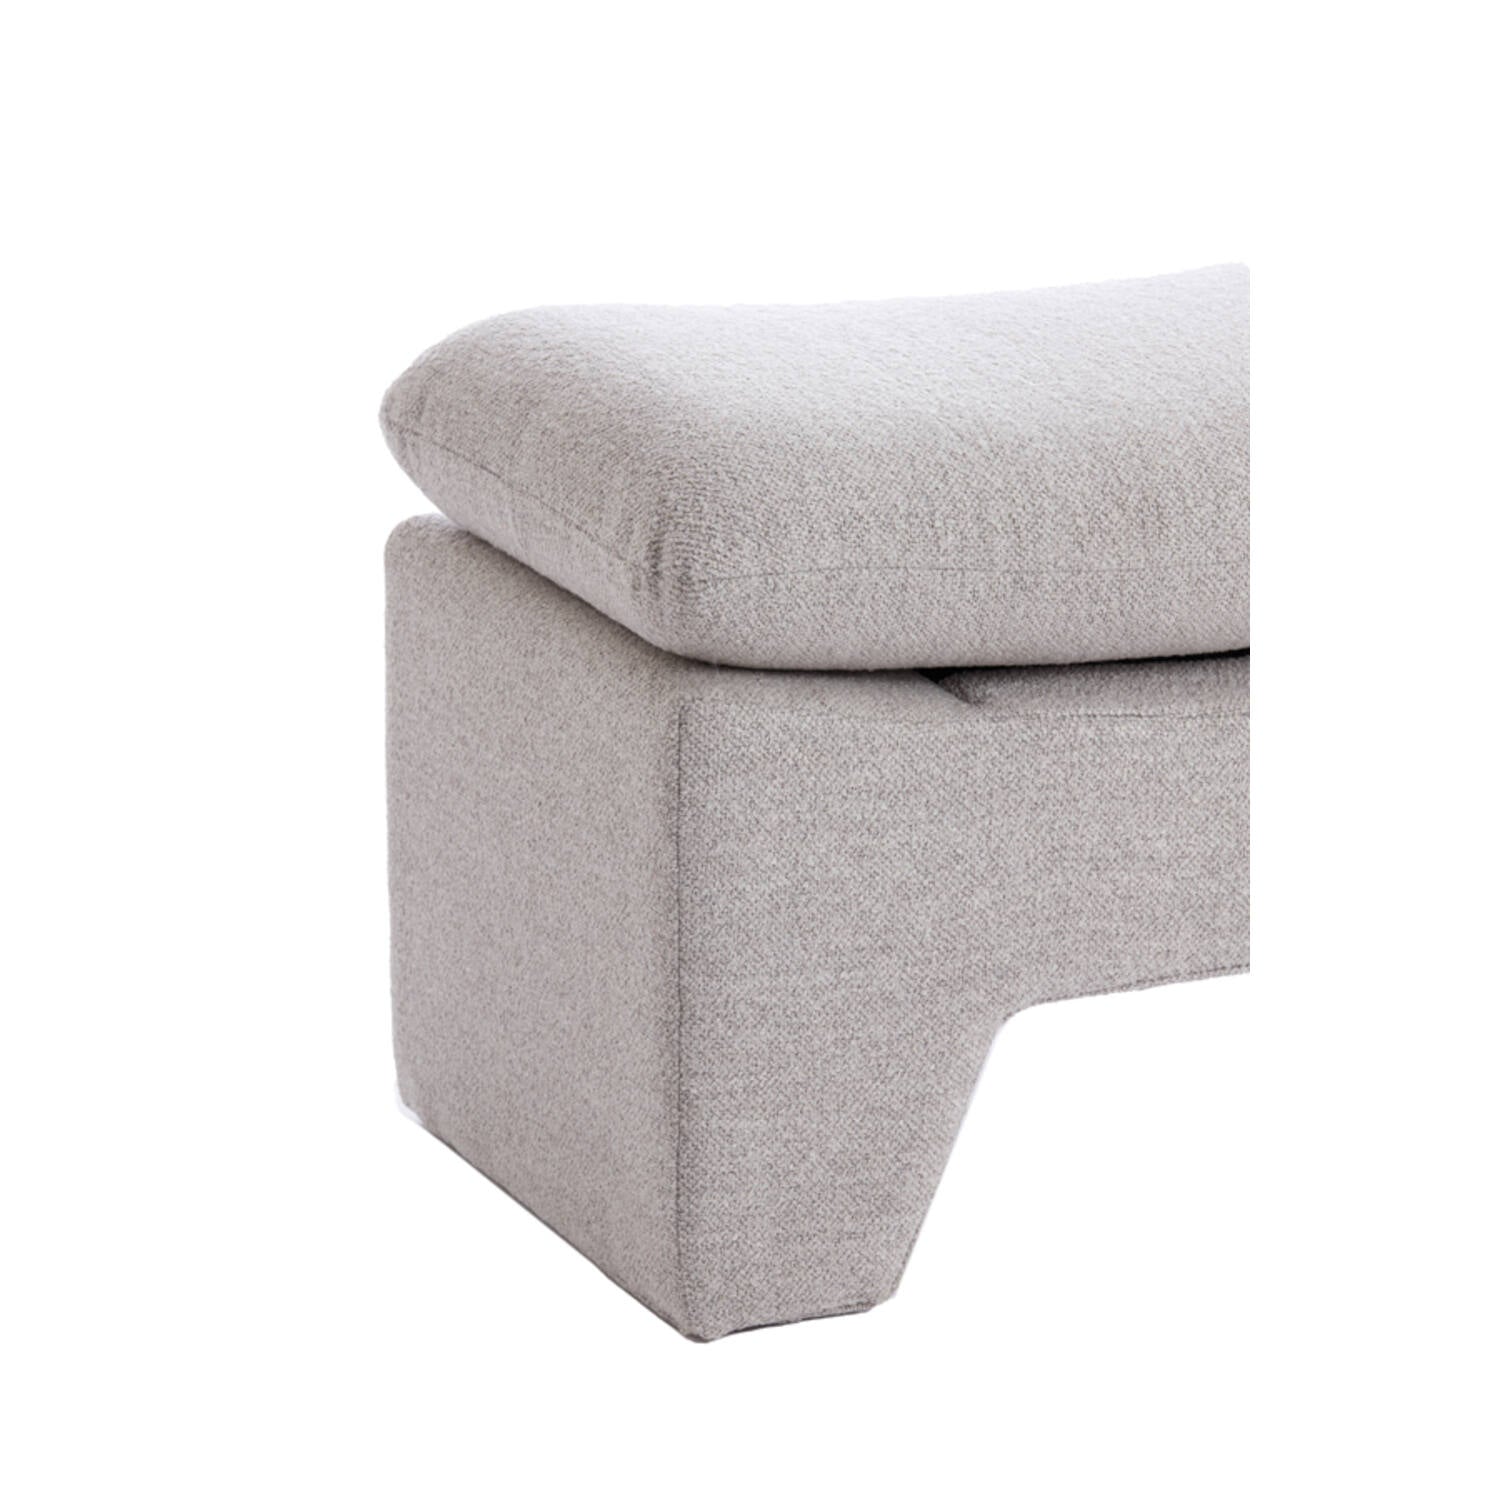 Luxury foot stool pouf